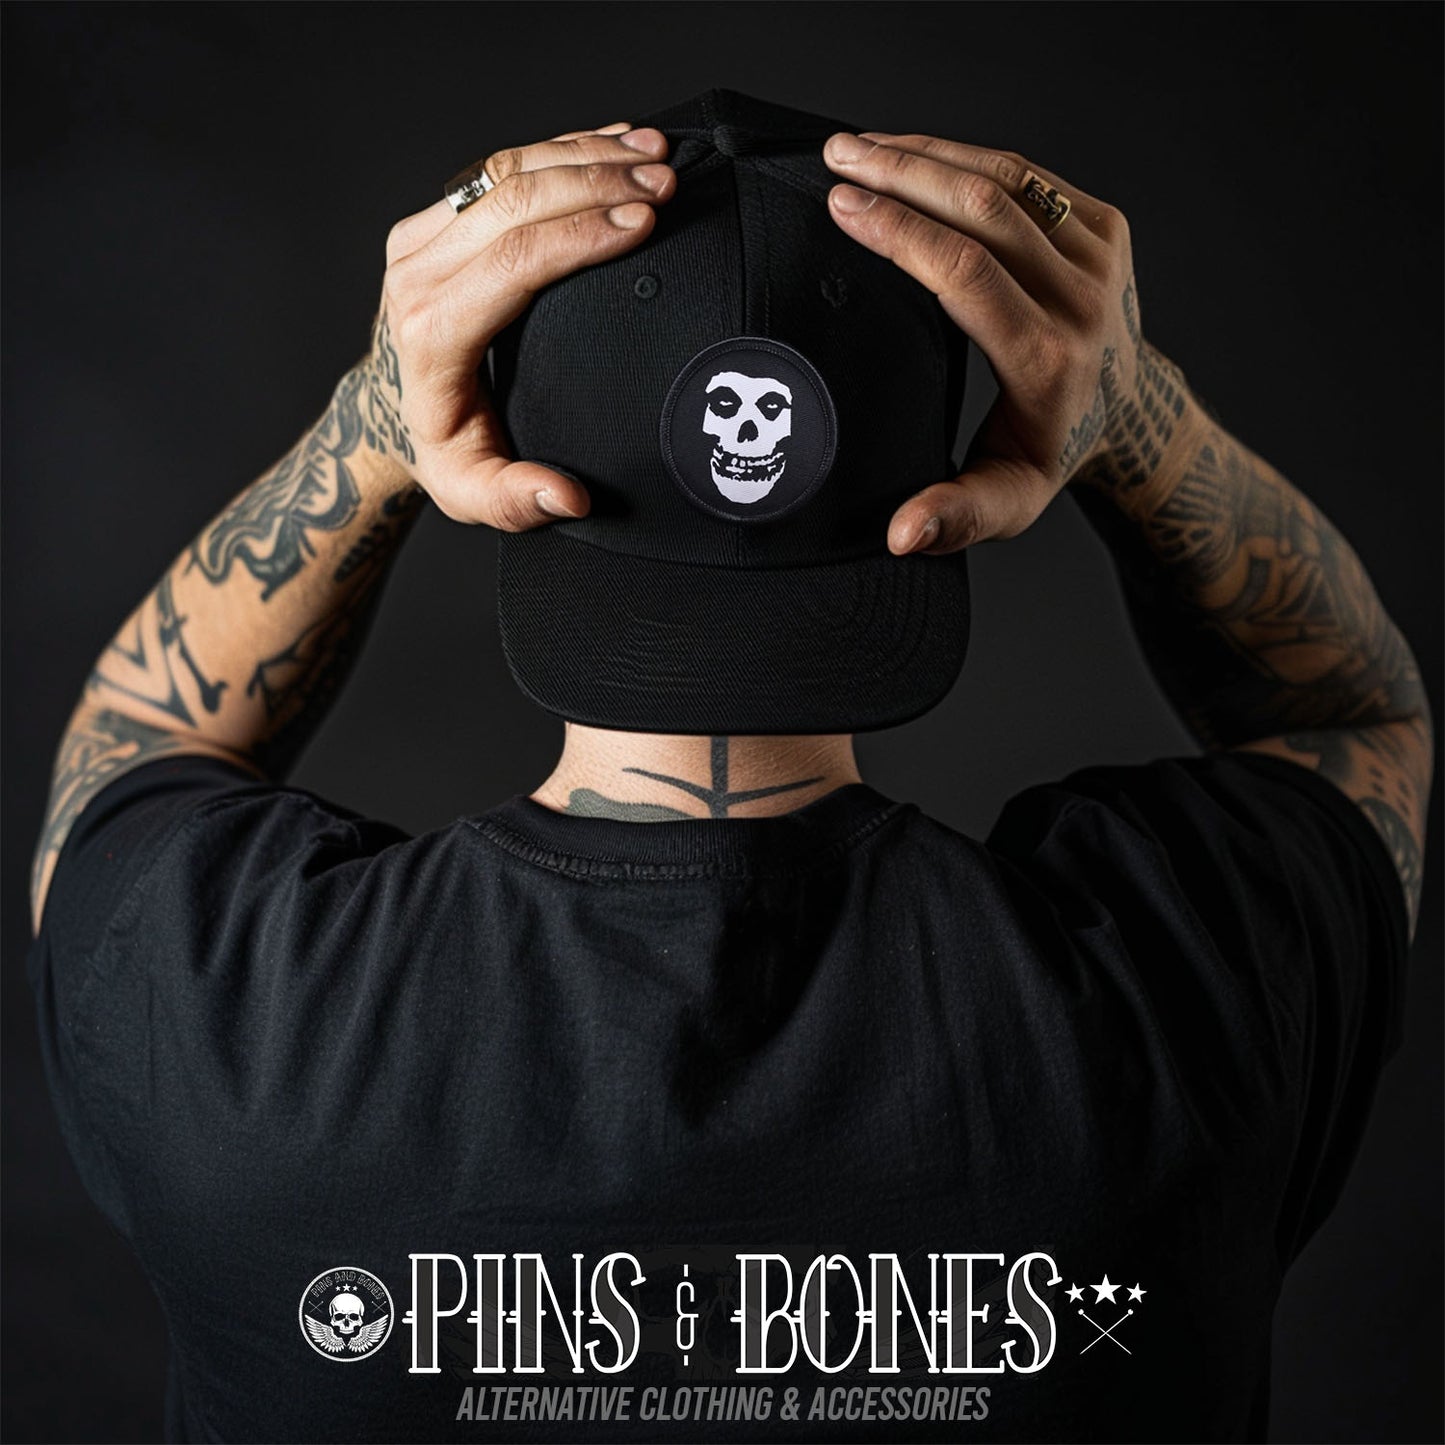 Pins & Bones Crimson Ghost Gothic Snapback Punk Rock Hat One Size Fits All, Occult Alternative Fashion Cotton Black